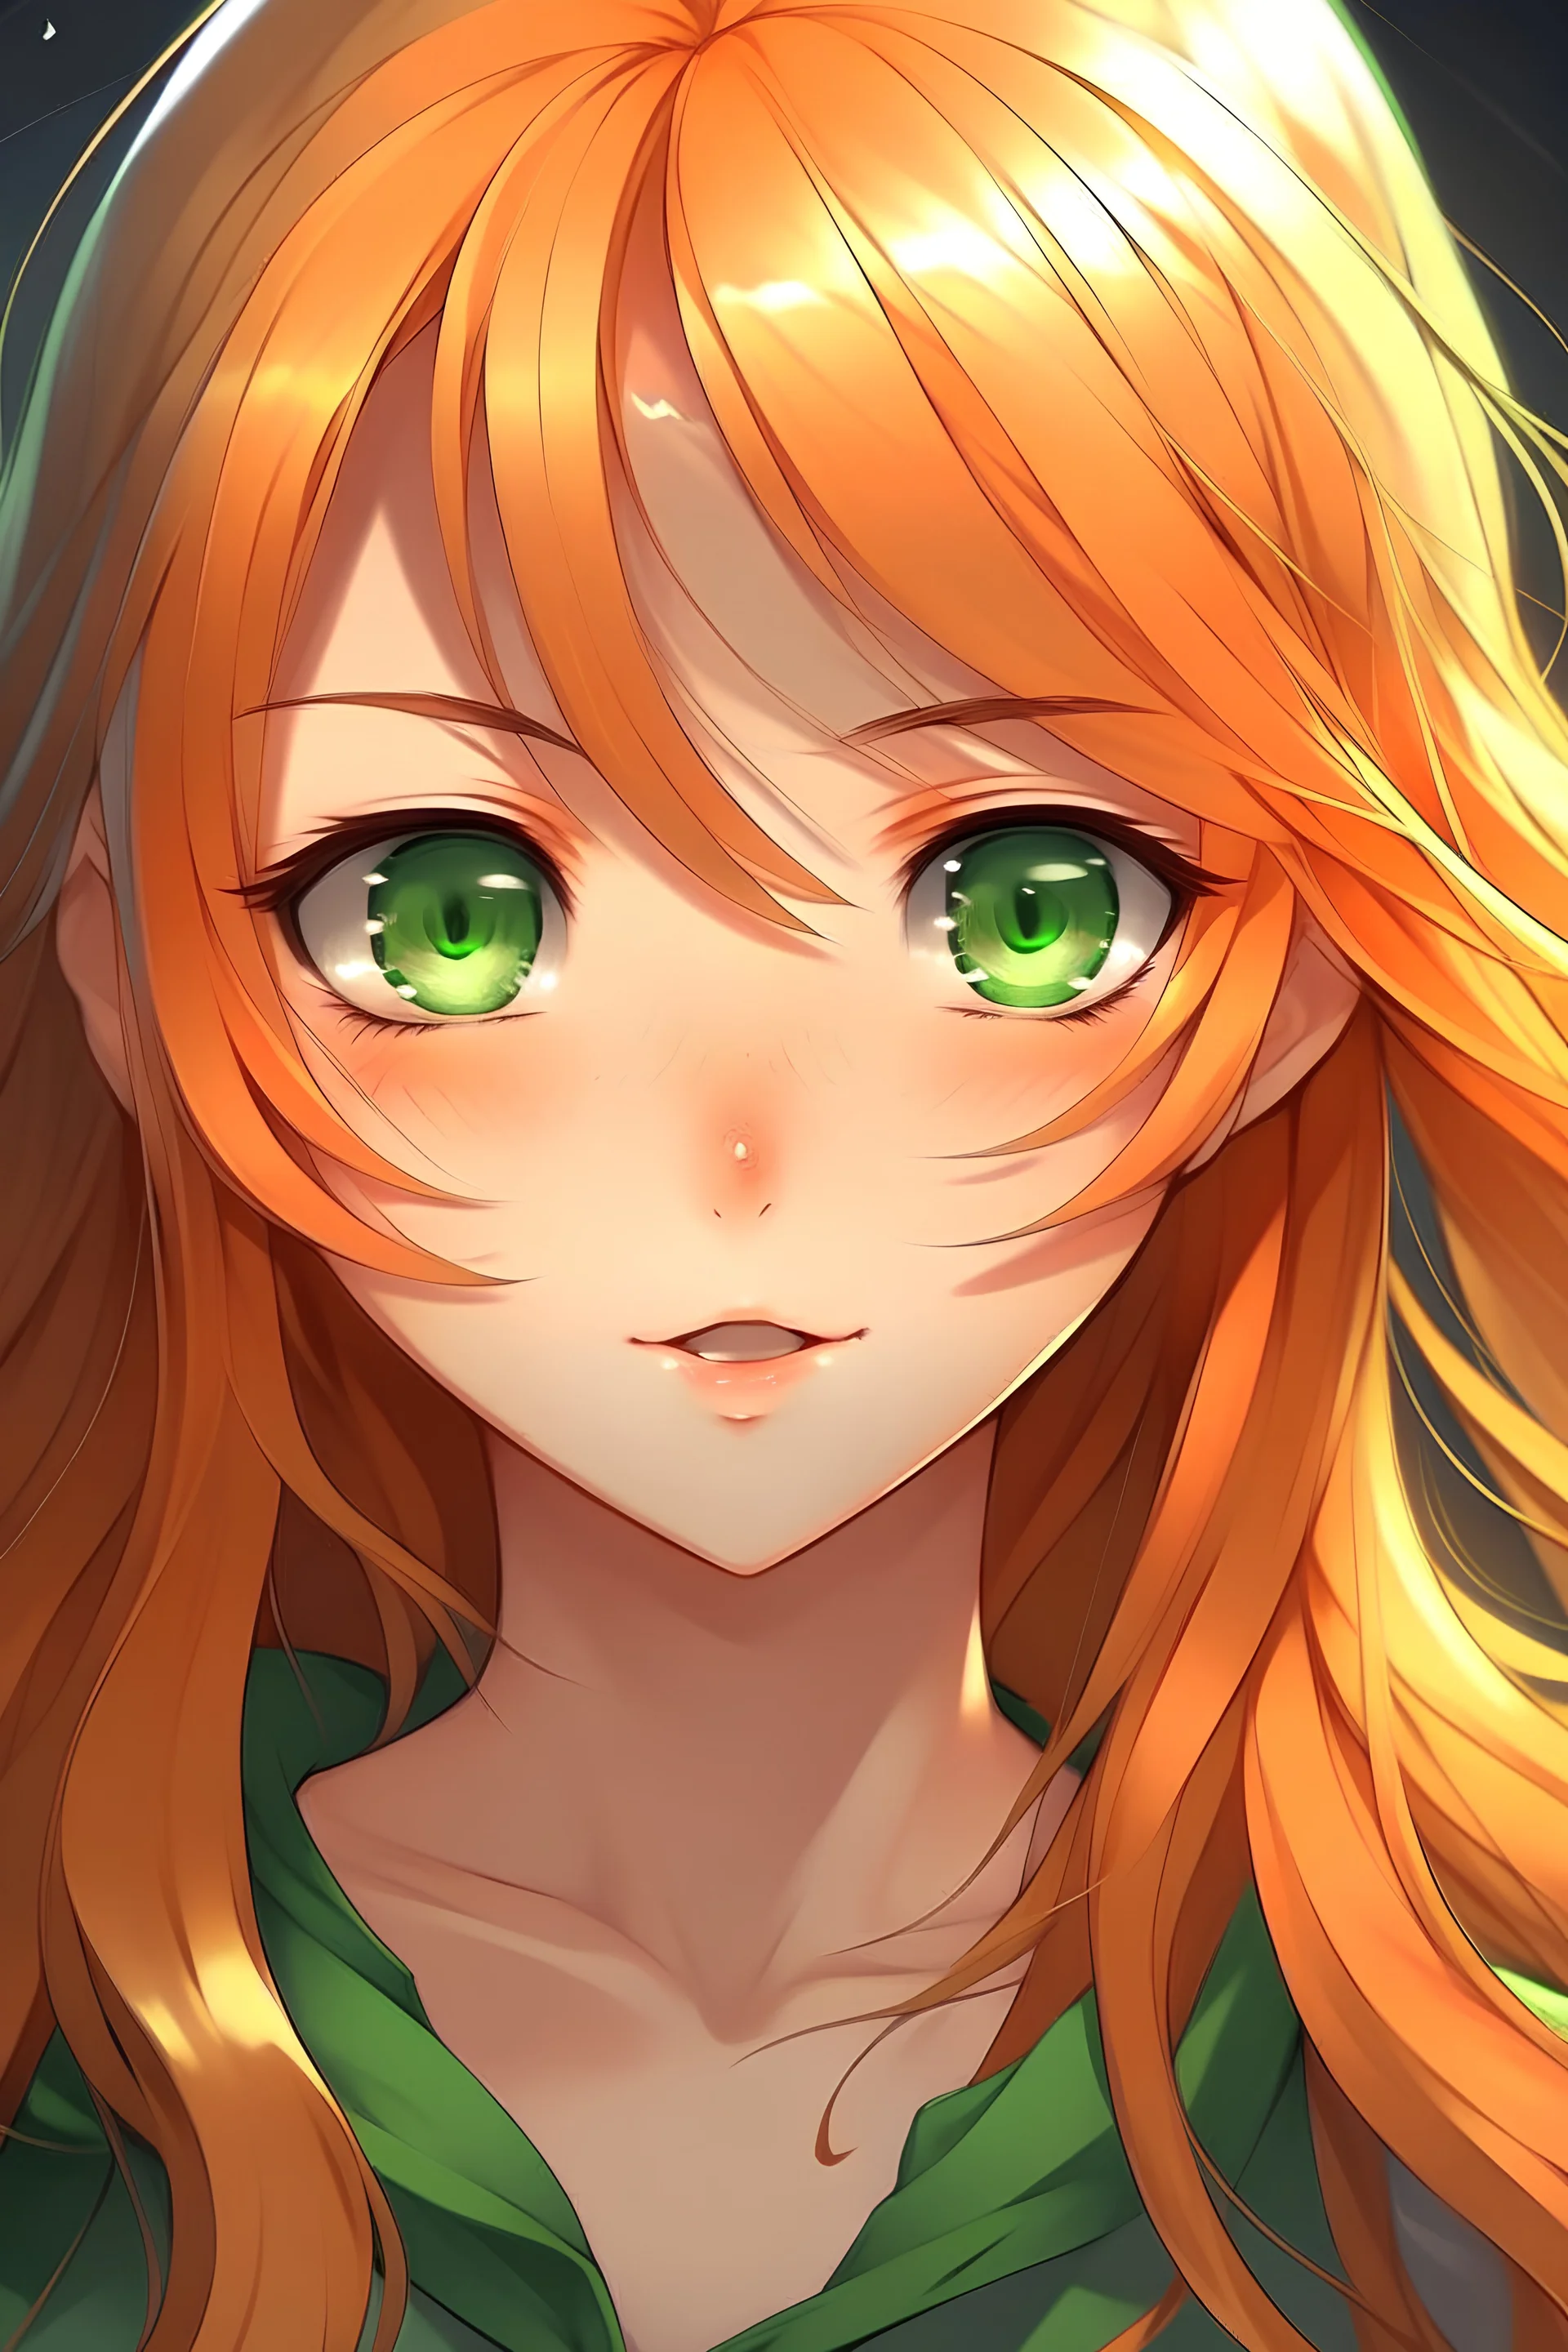 Anime girl with light orange hair and green eyes